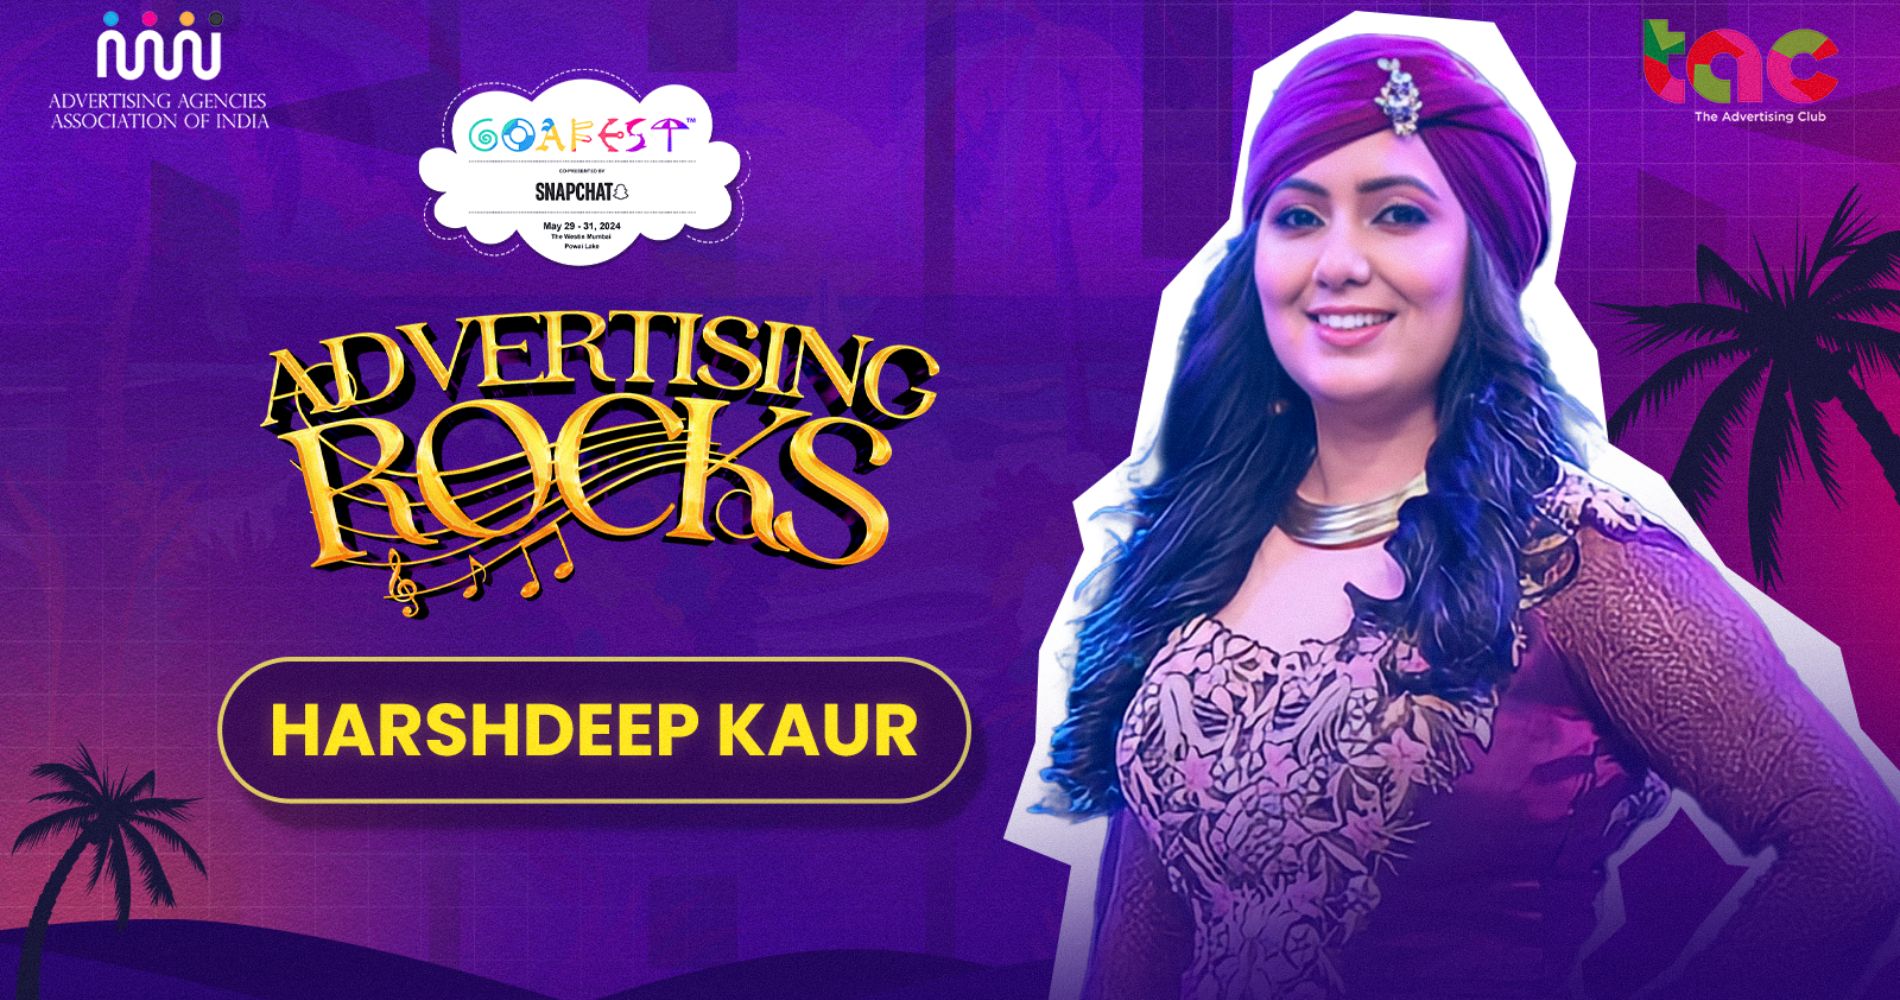 Melody Maestro Harshdeep Kaur To Judge Advertising Rocks At Goafest